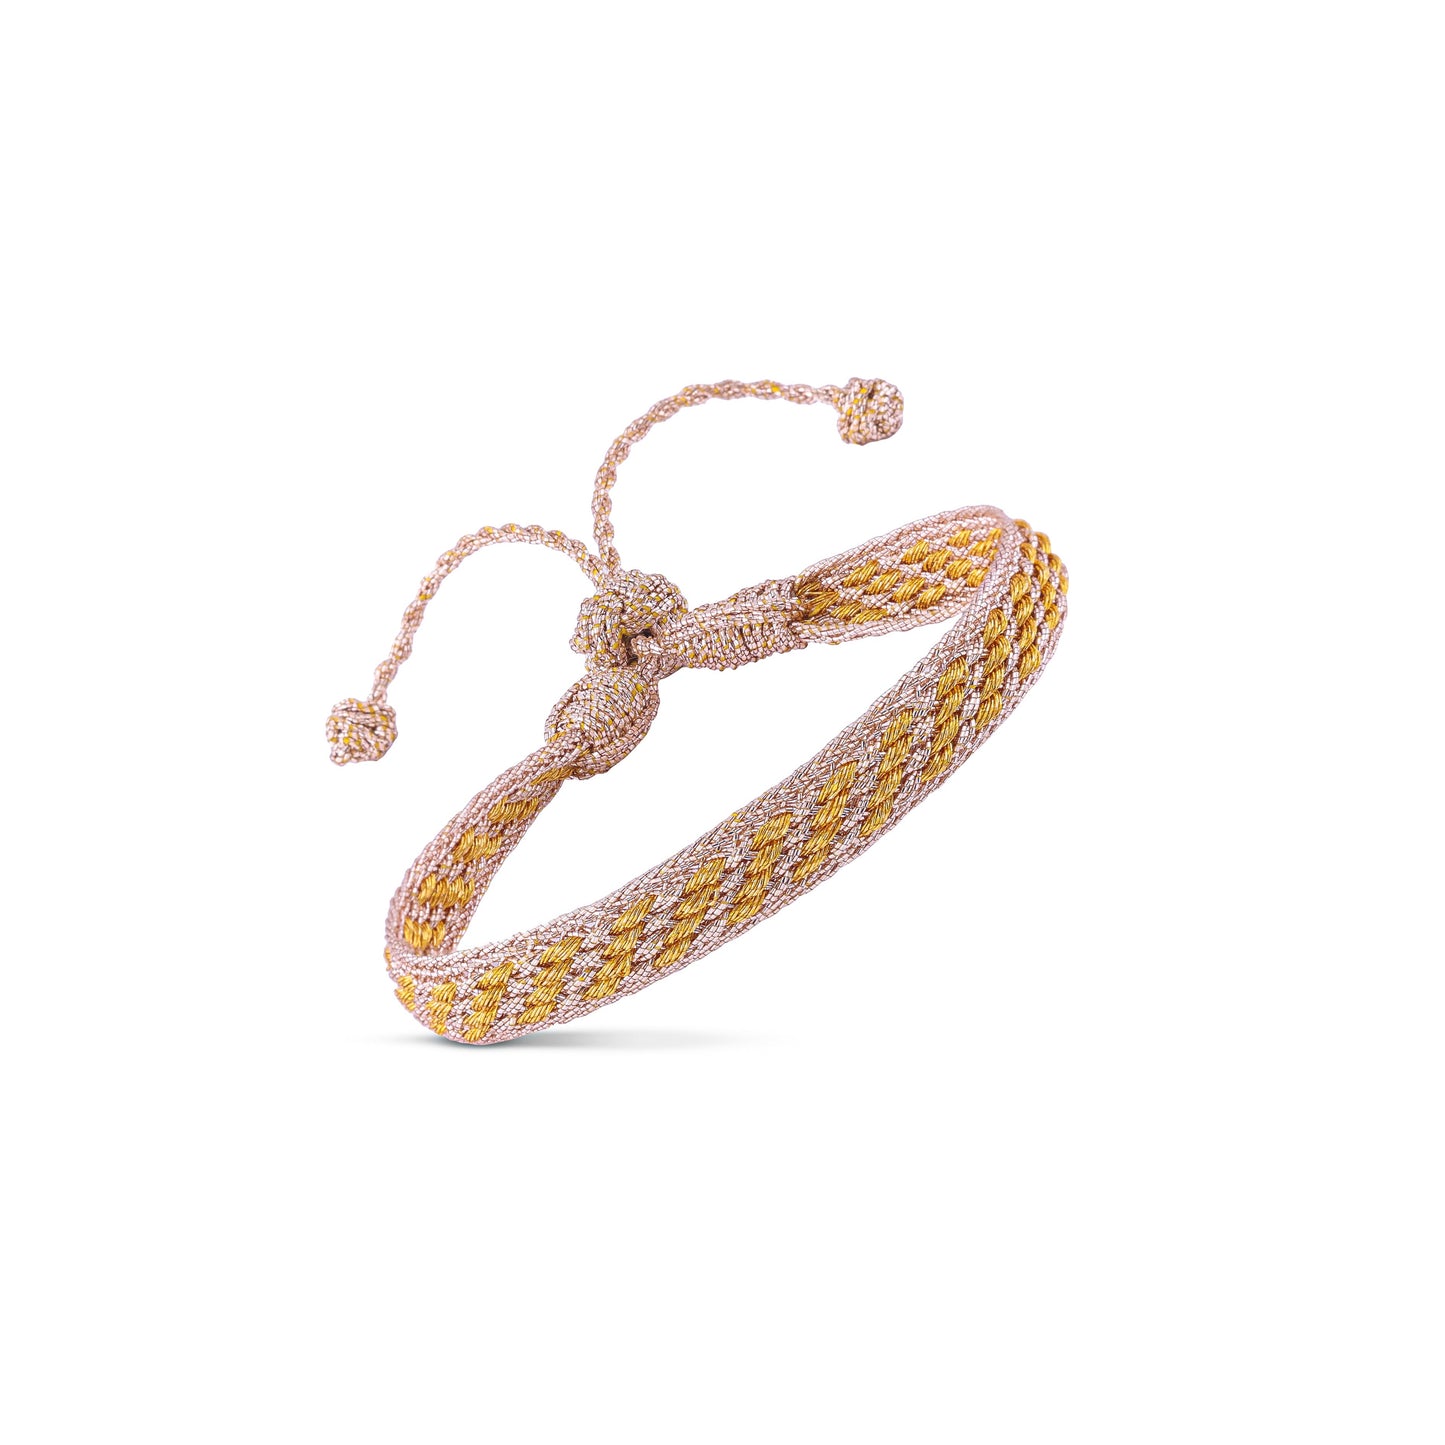 Izy n°2 Bracelet in Rose Gold Amber